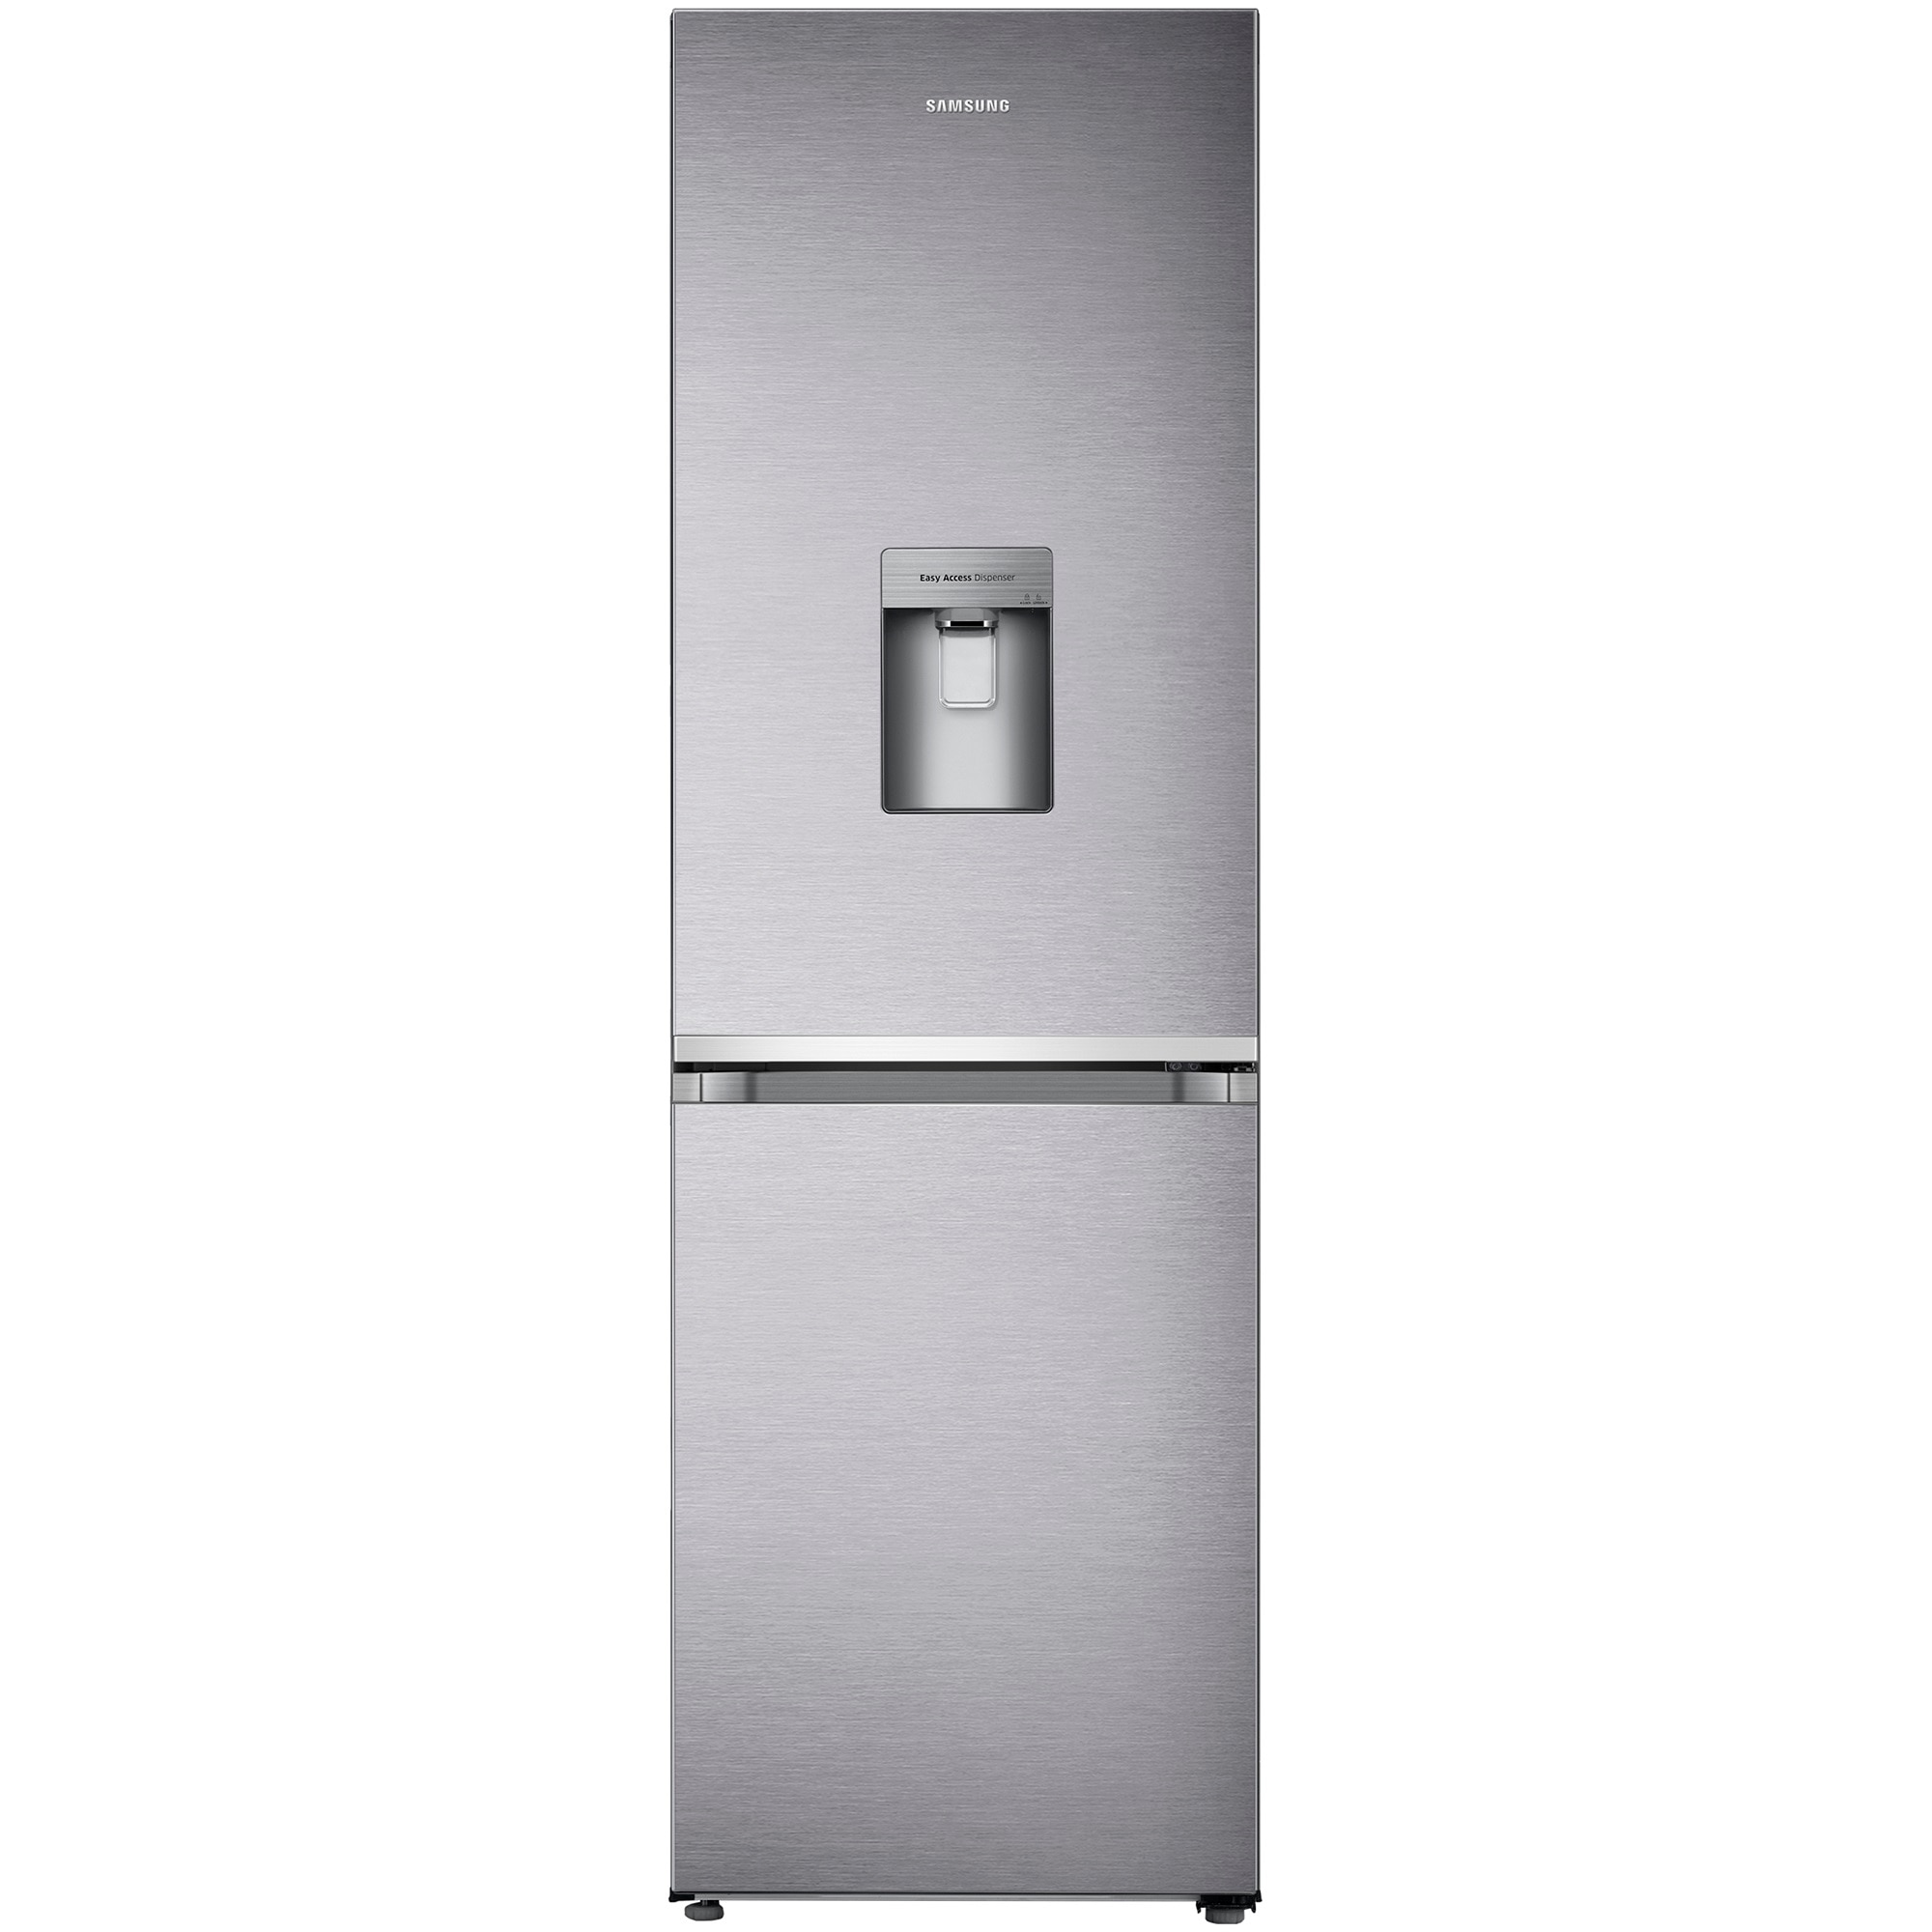 Хладилник Samsung RB38J7530SR с обем от 373 л.